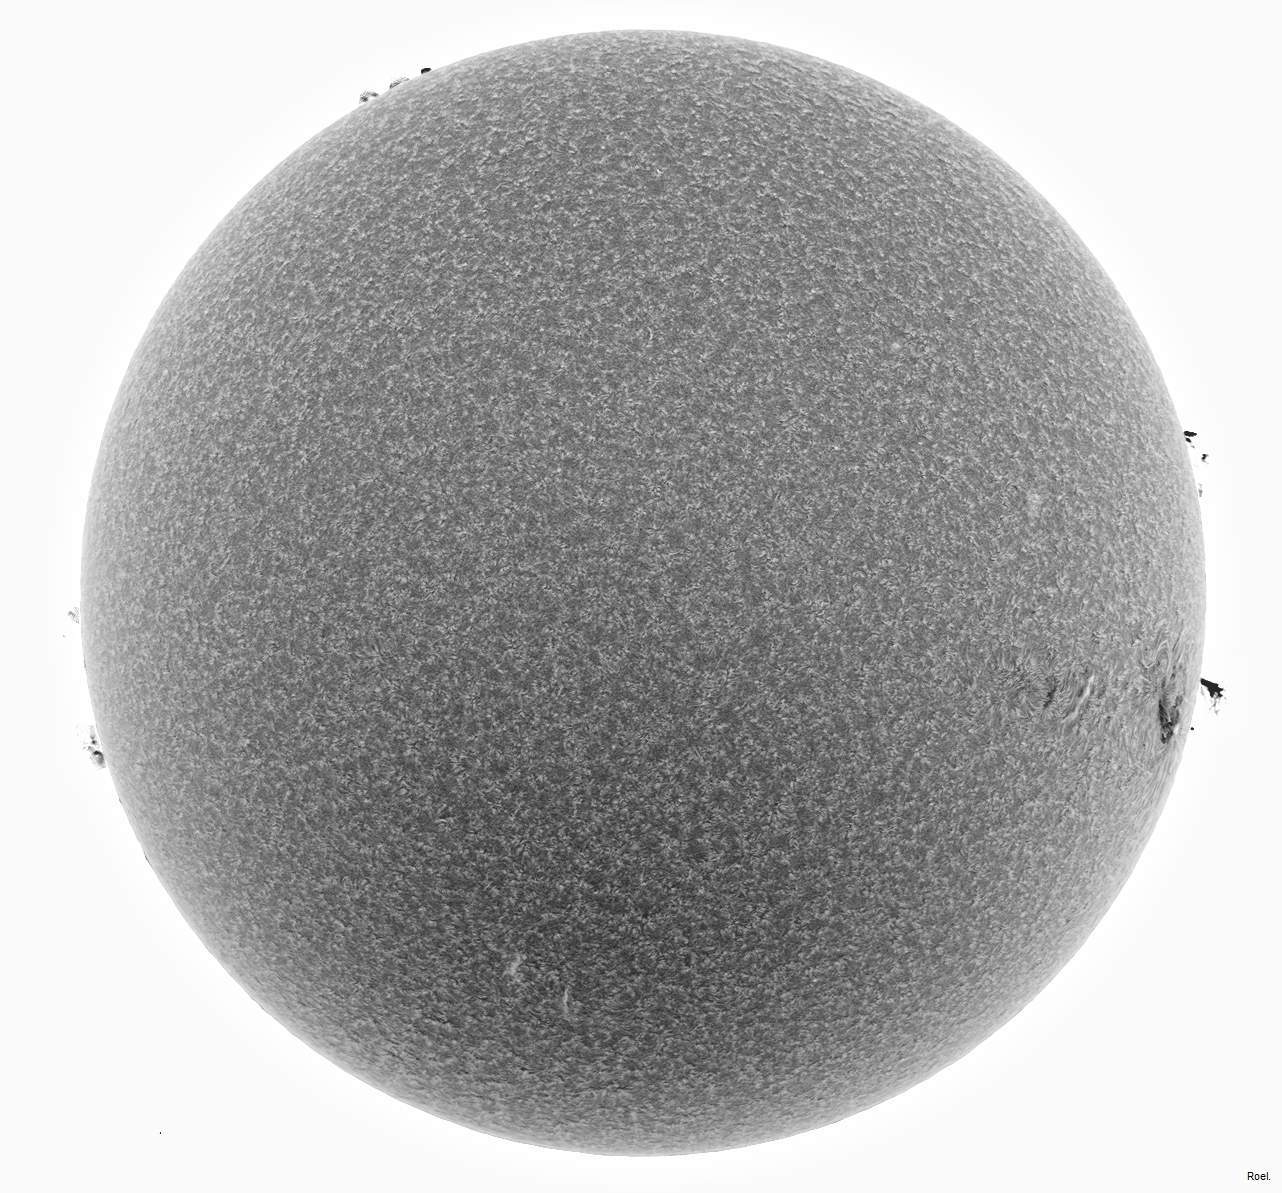 Sol del 23 de marzo del 2019-Solarmax 90-DS-BF30-1neg.jpg